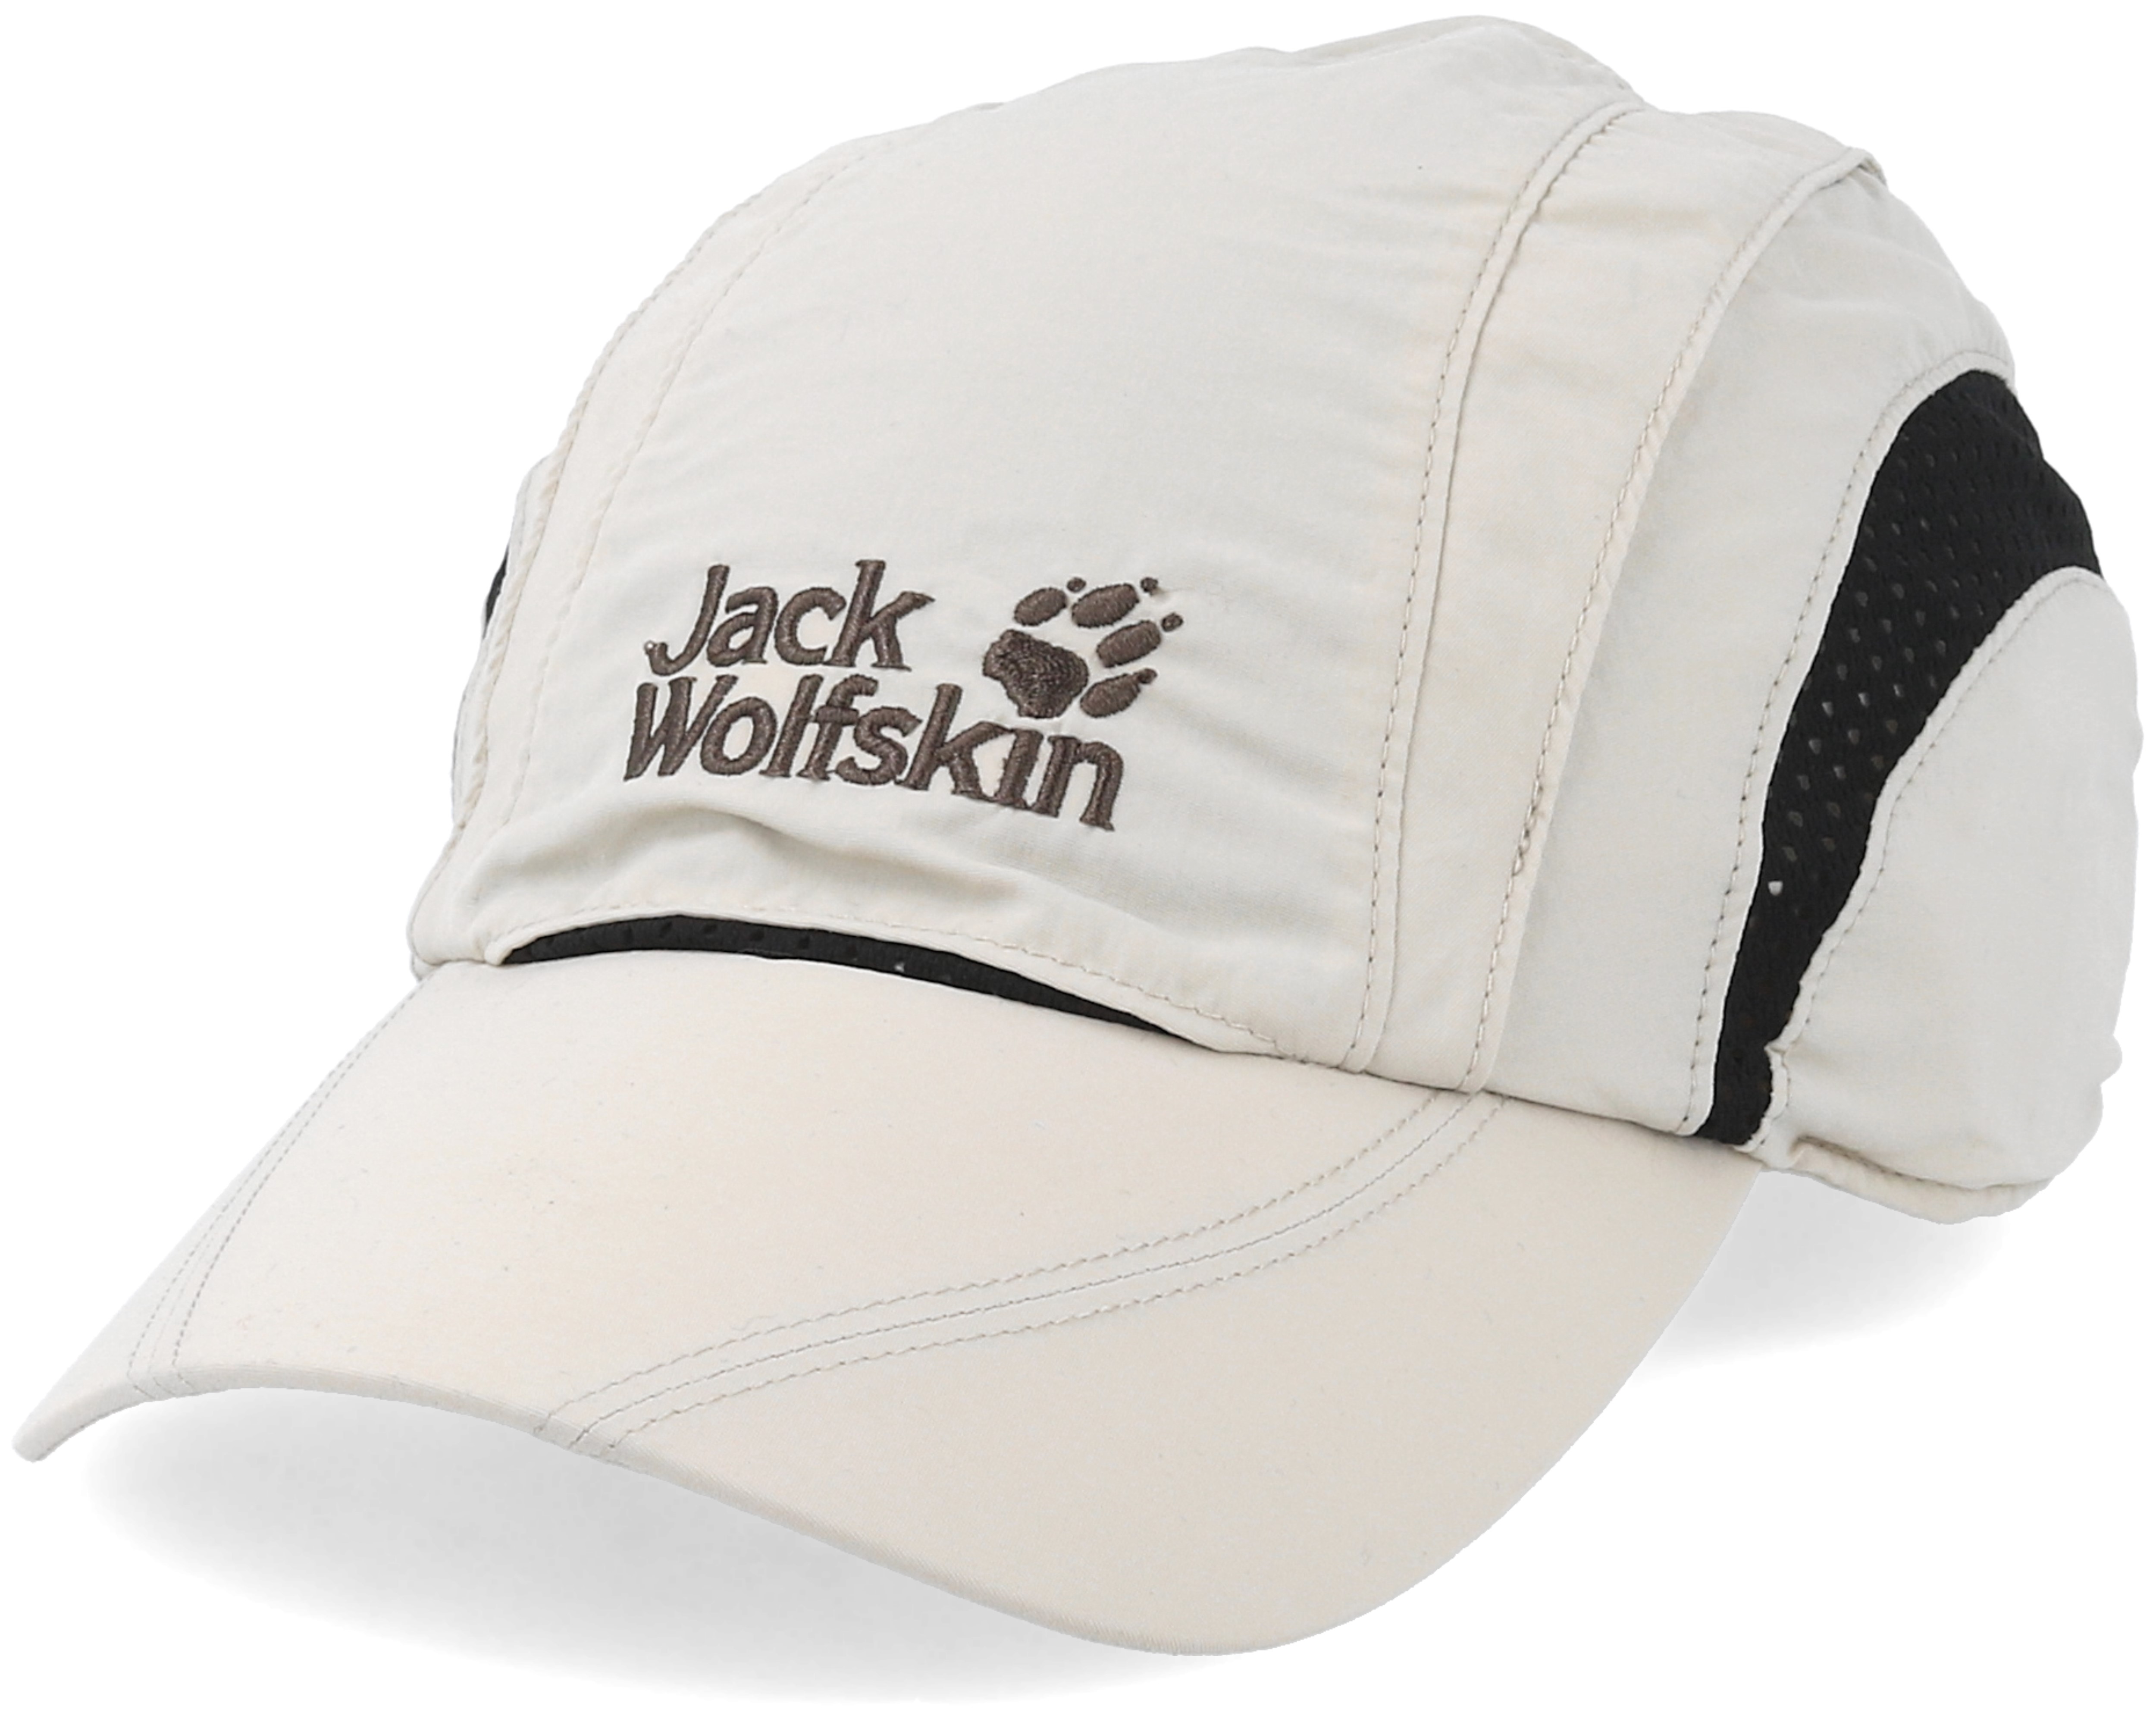 Wolfskin Jack Sand - Light Cap Vent Adjustable Pro cap